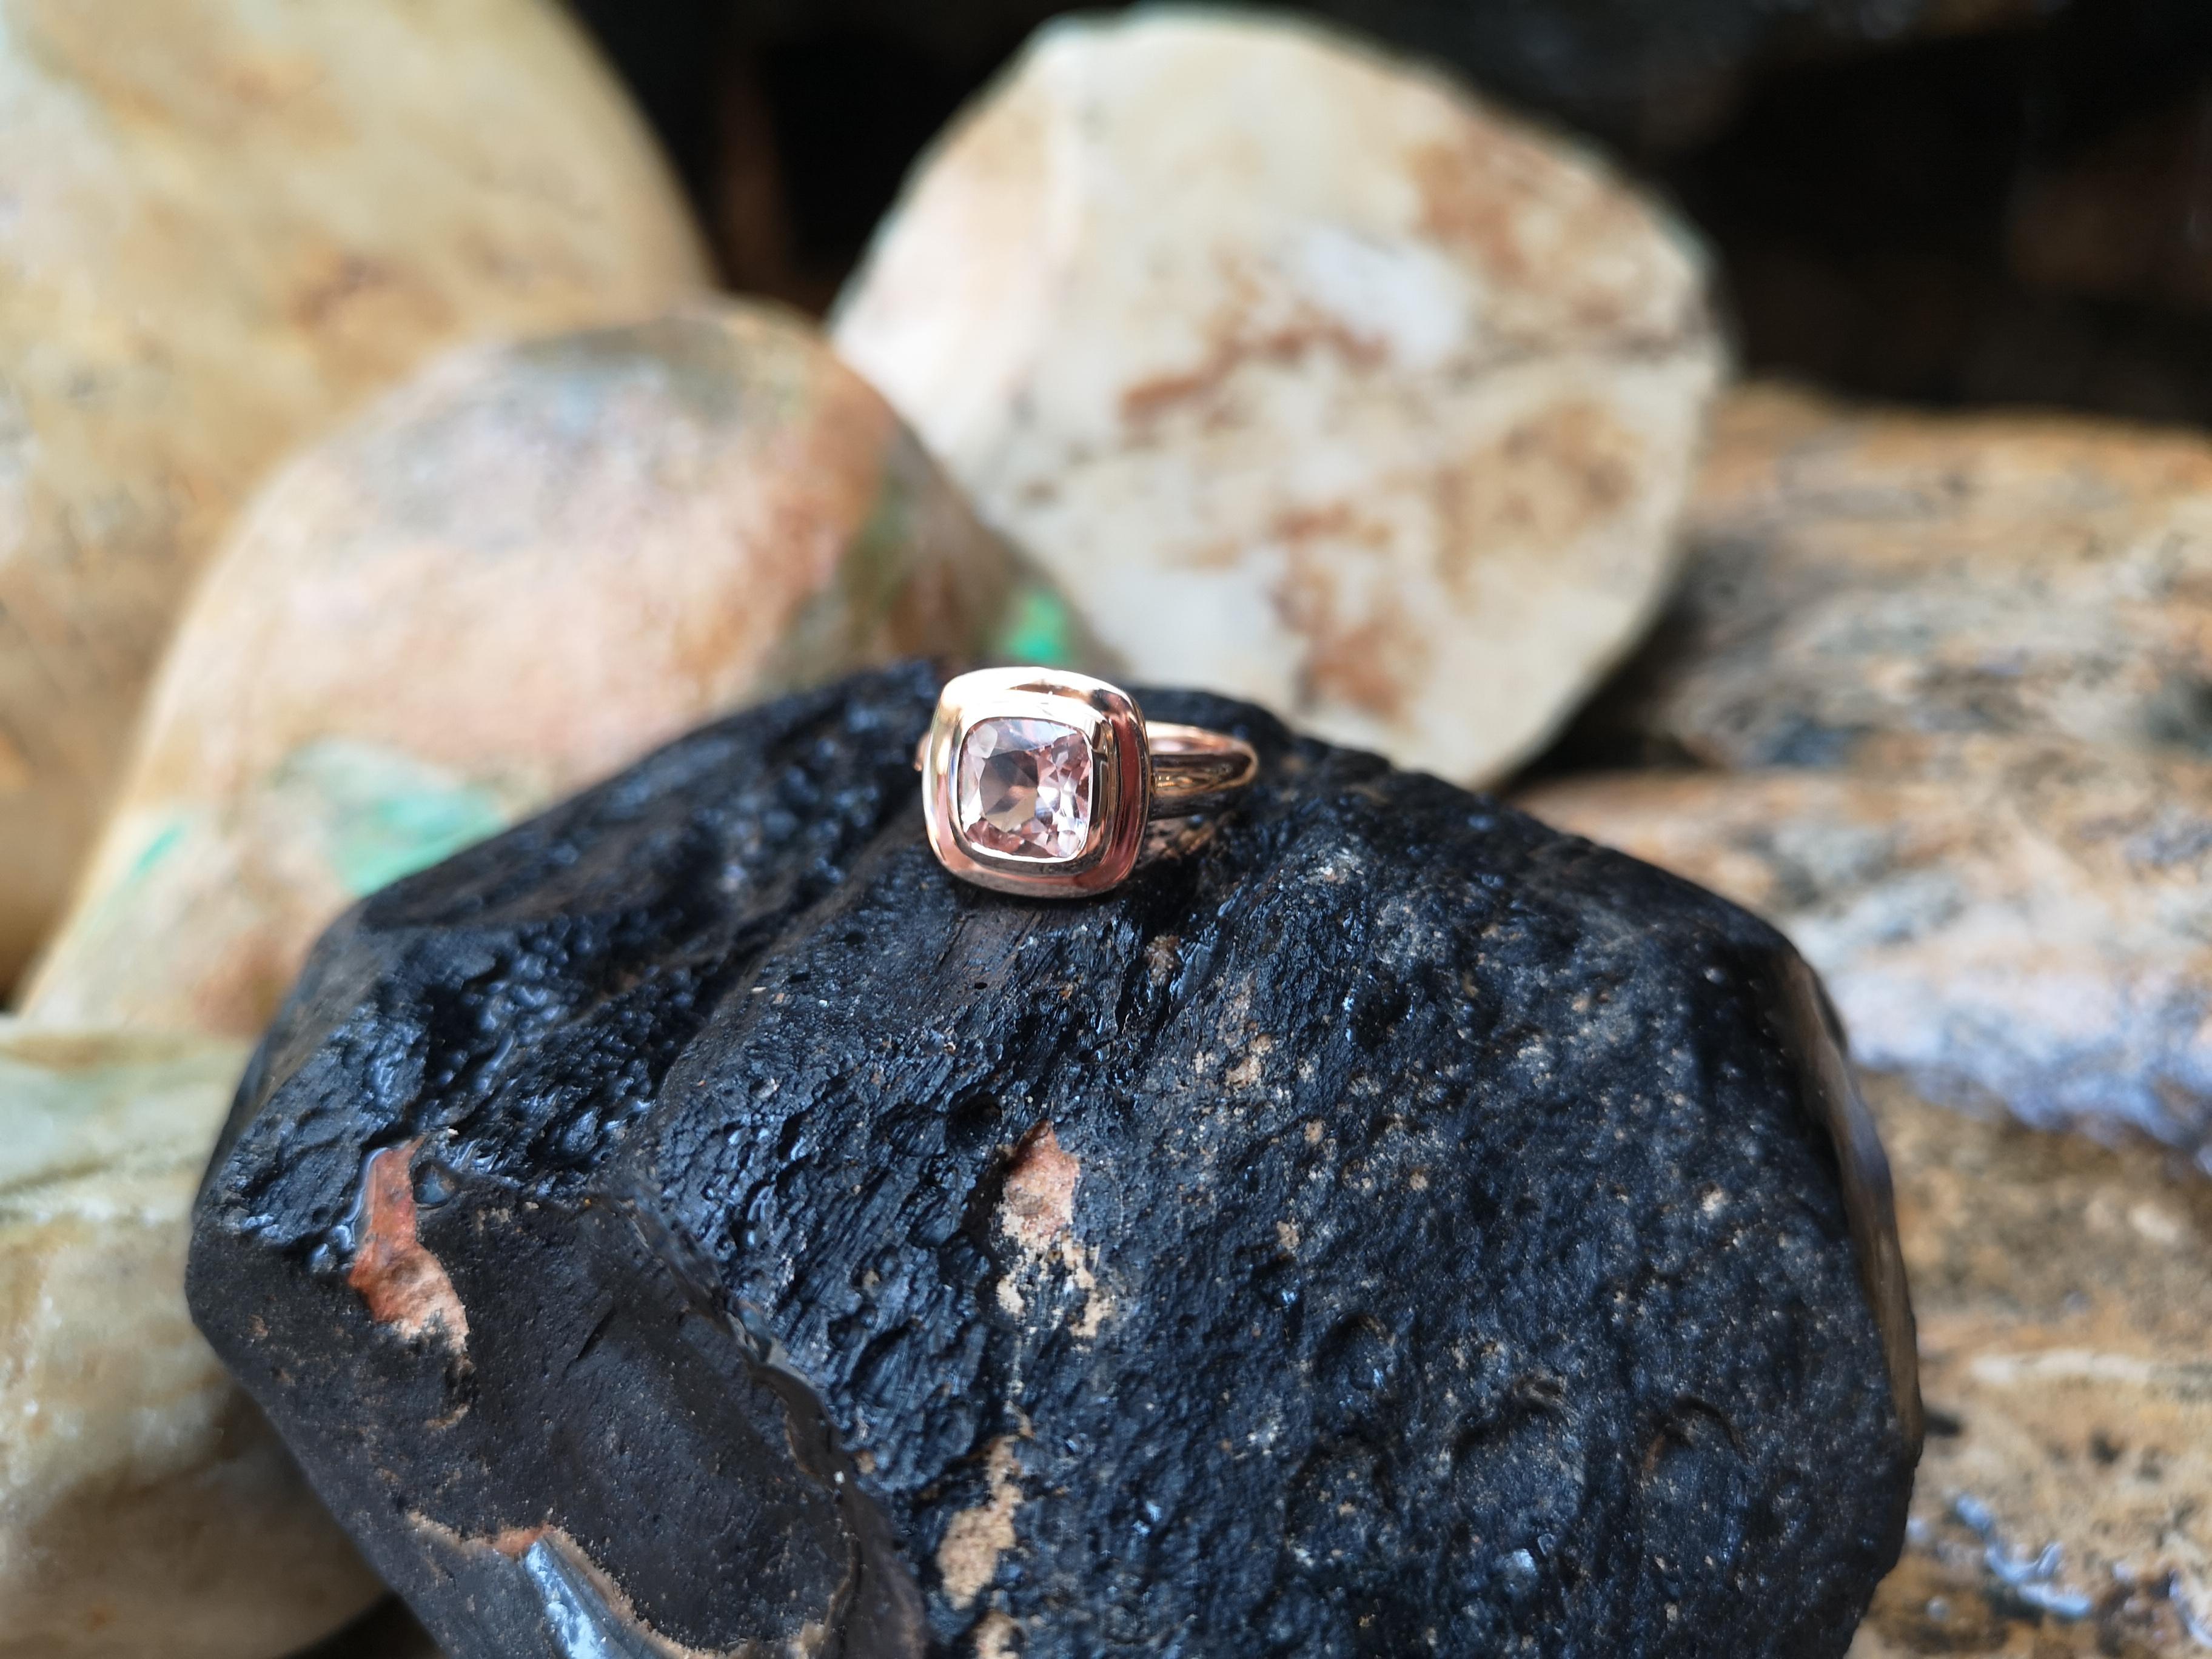 Morganite 2.04 carats Ring set in 18 Karat Rose Gold Settings

Width: 1.4 cm
Length: 1.4 cm 
Ring Size: 52

